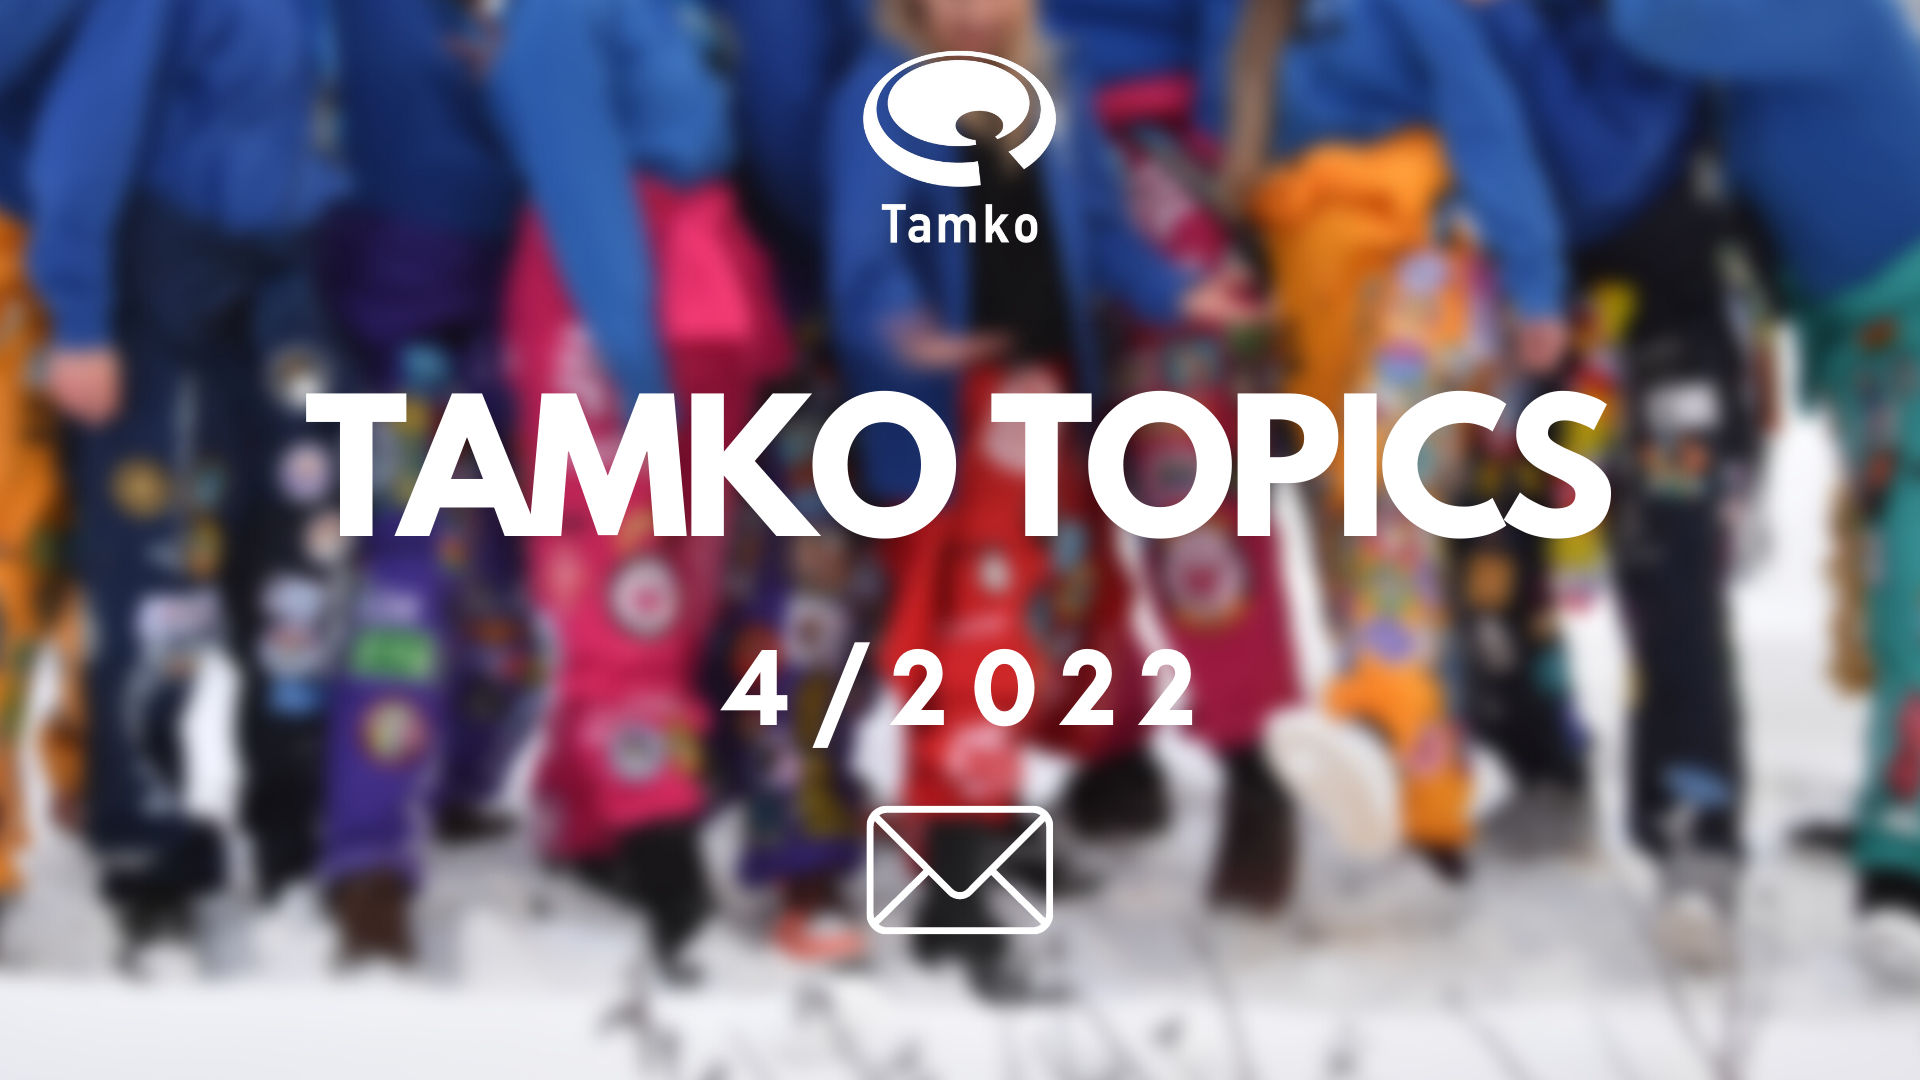 TAMKO TOPICS 4/2022